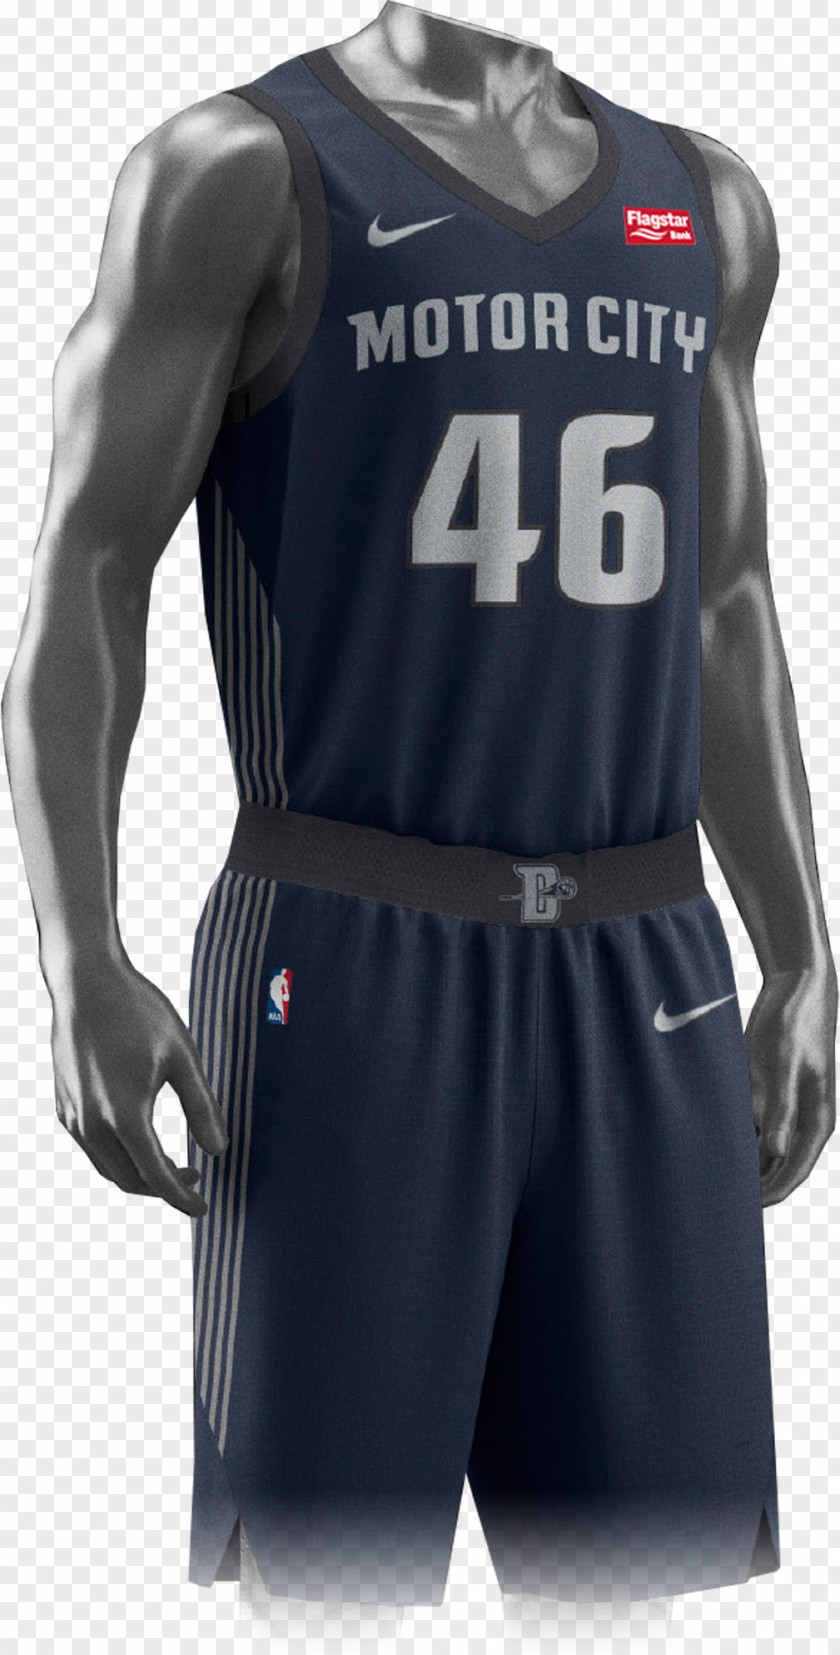 Detroit Pistons Dallas Mavericks Houston Rockets T-shirt Jersey PNG